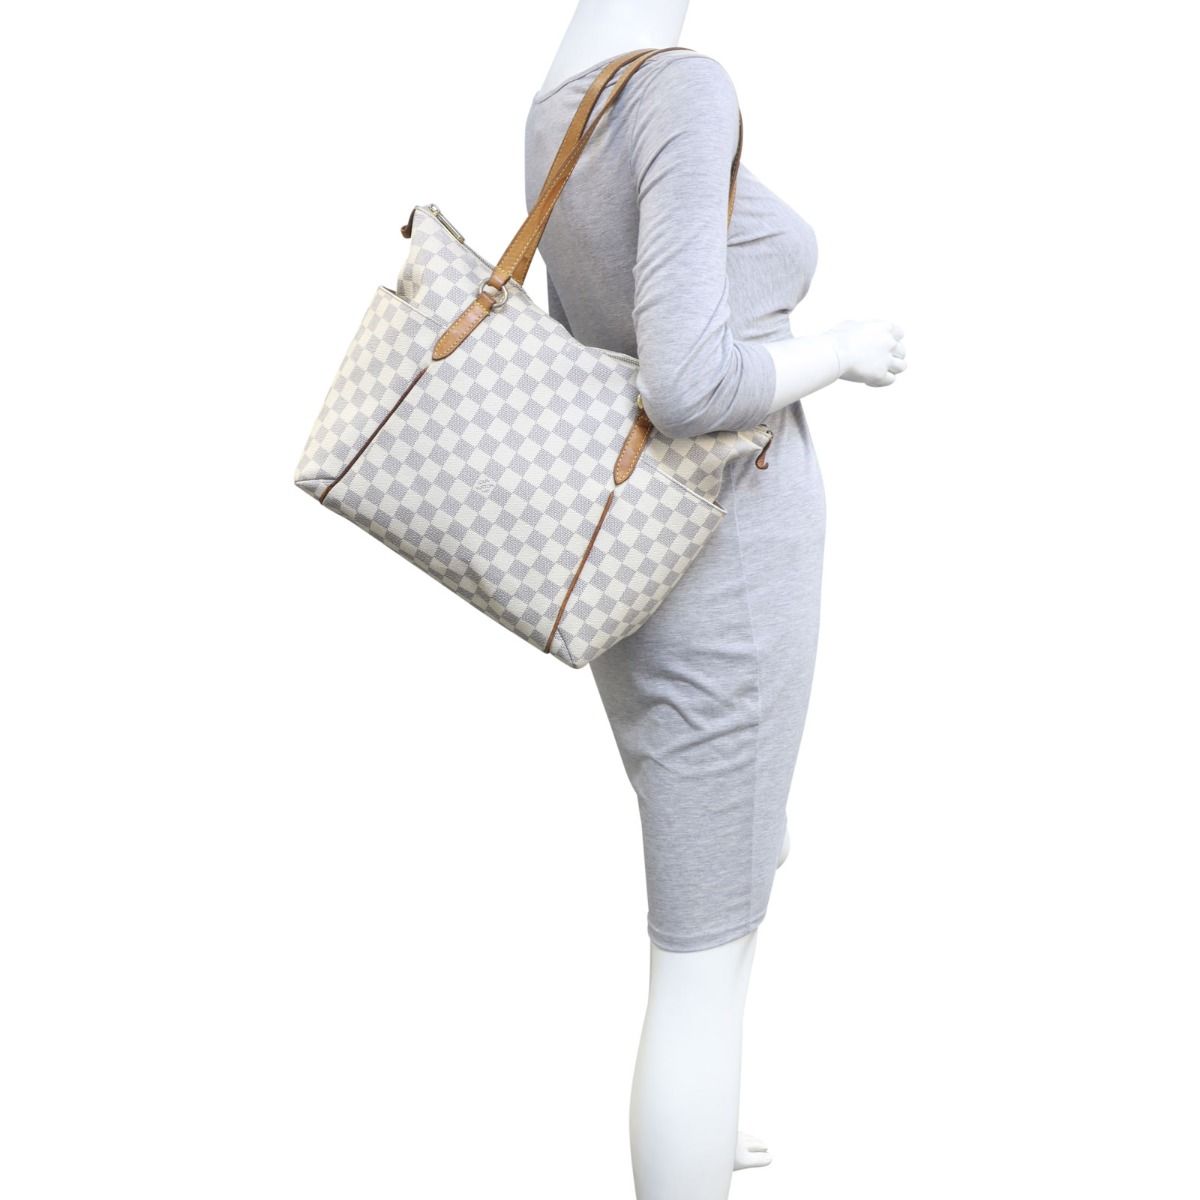 Louis Vuitton, Bags, Extra Large Louis Vuitton Damier Azur Totally Mm